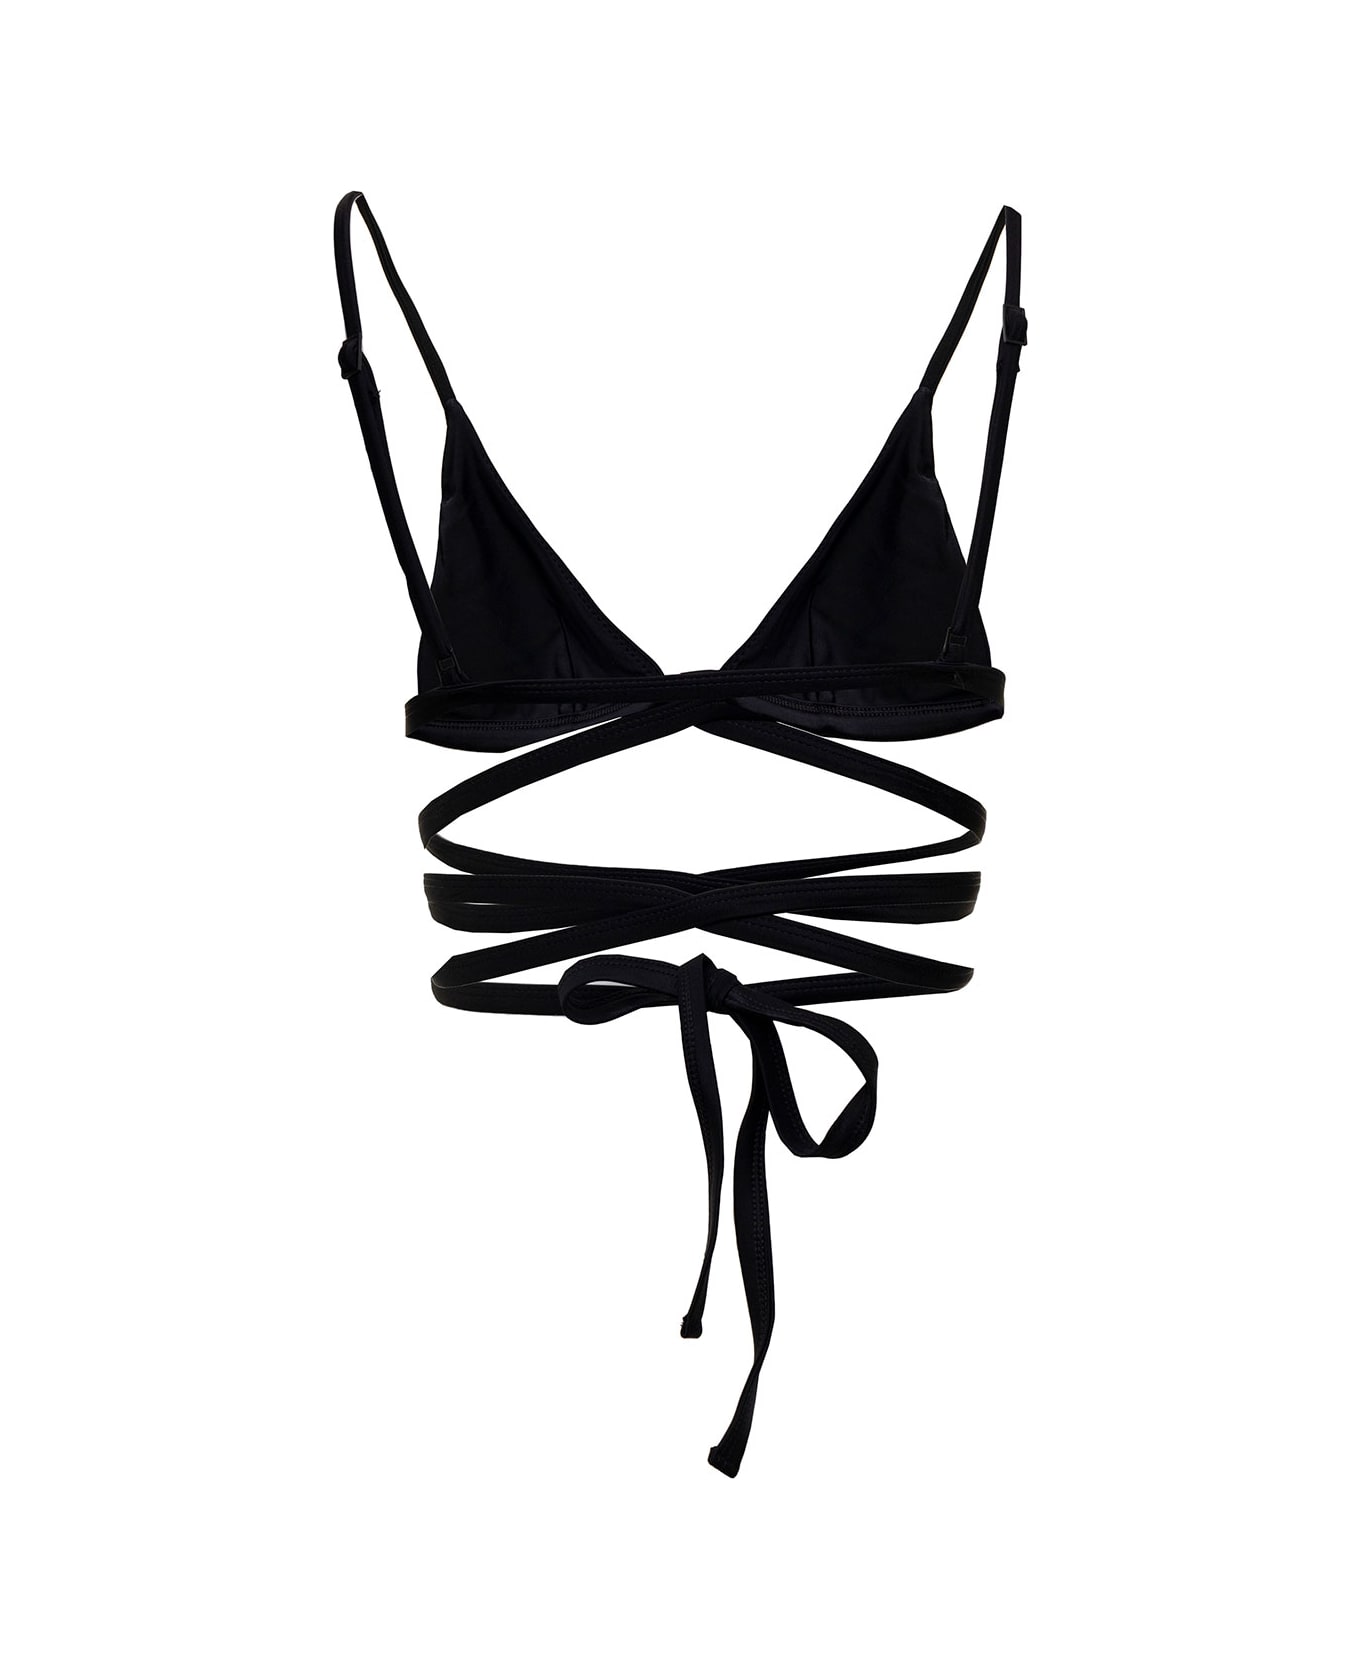 MATTEAU Woman's Black Nylon Bikini Top With Crossed Laces - Black